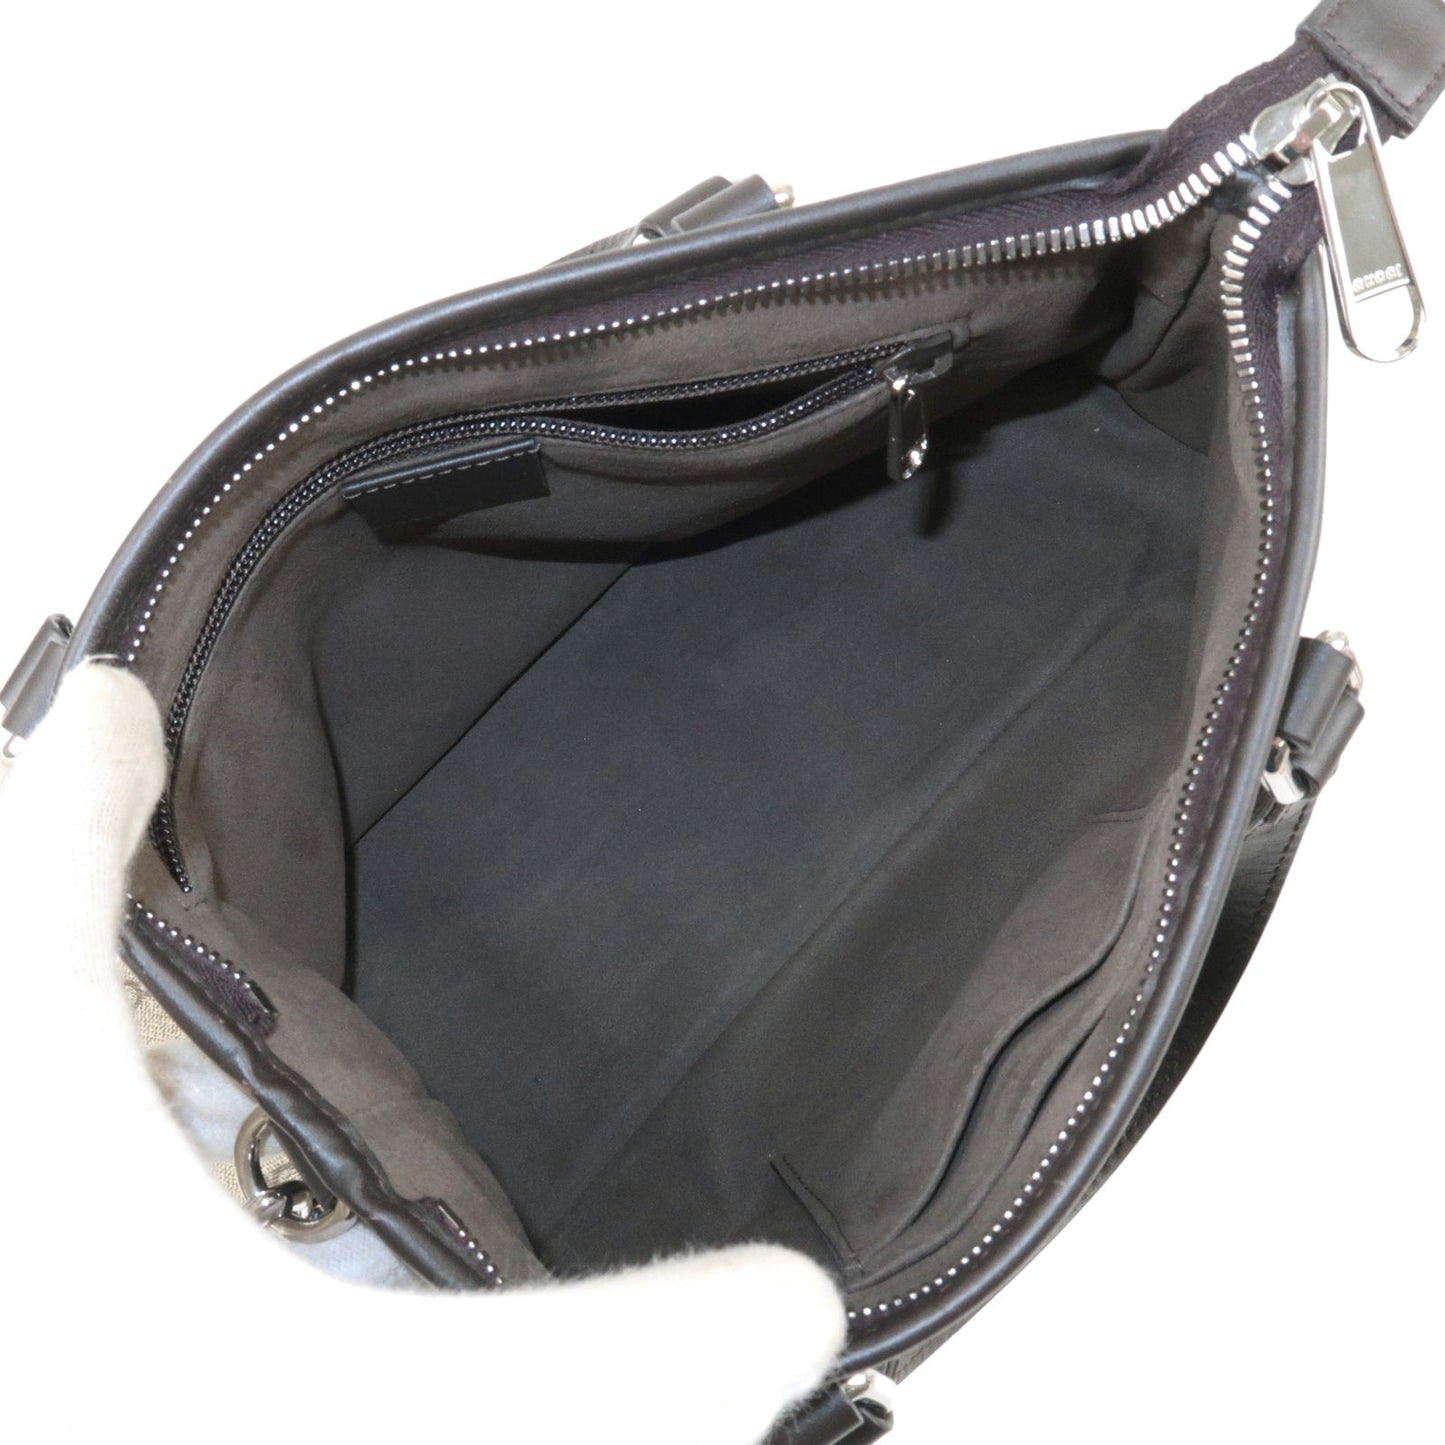 GUCCI GG Supreme Leather 2Way Bag Hand Bag Beige Brown 429019